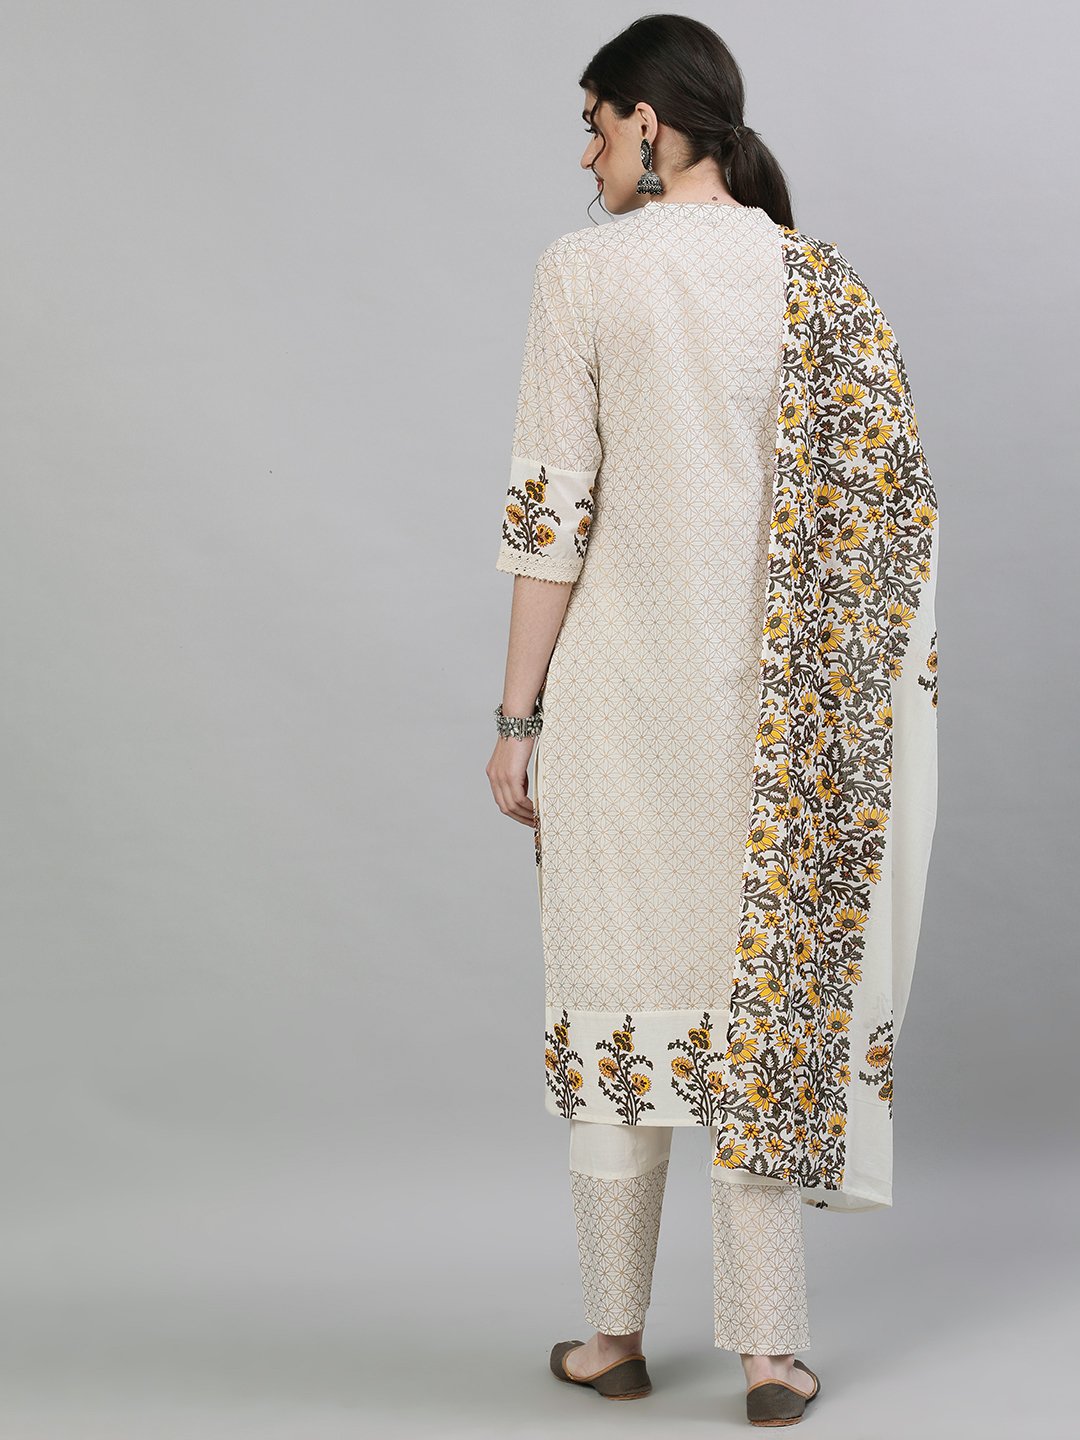 Ishin Women's Cotton Off White Printed Straight Kurta Trouser Dupatta Set